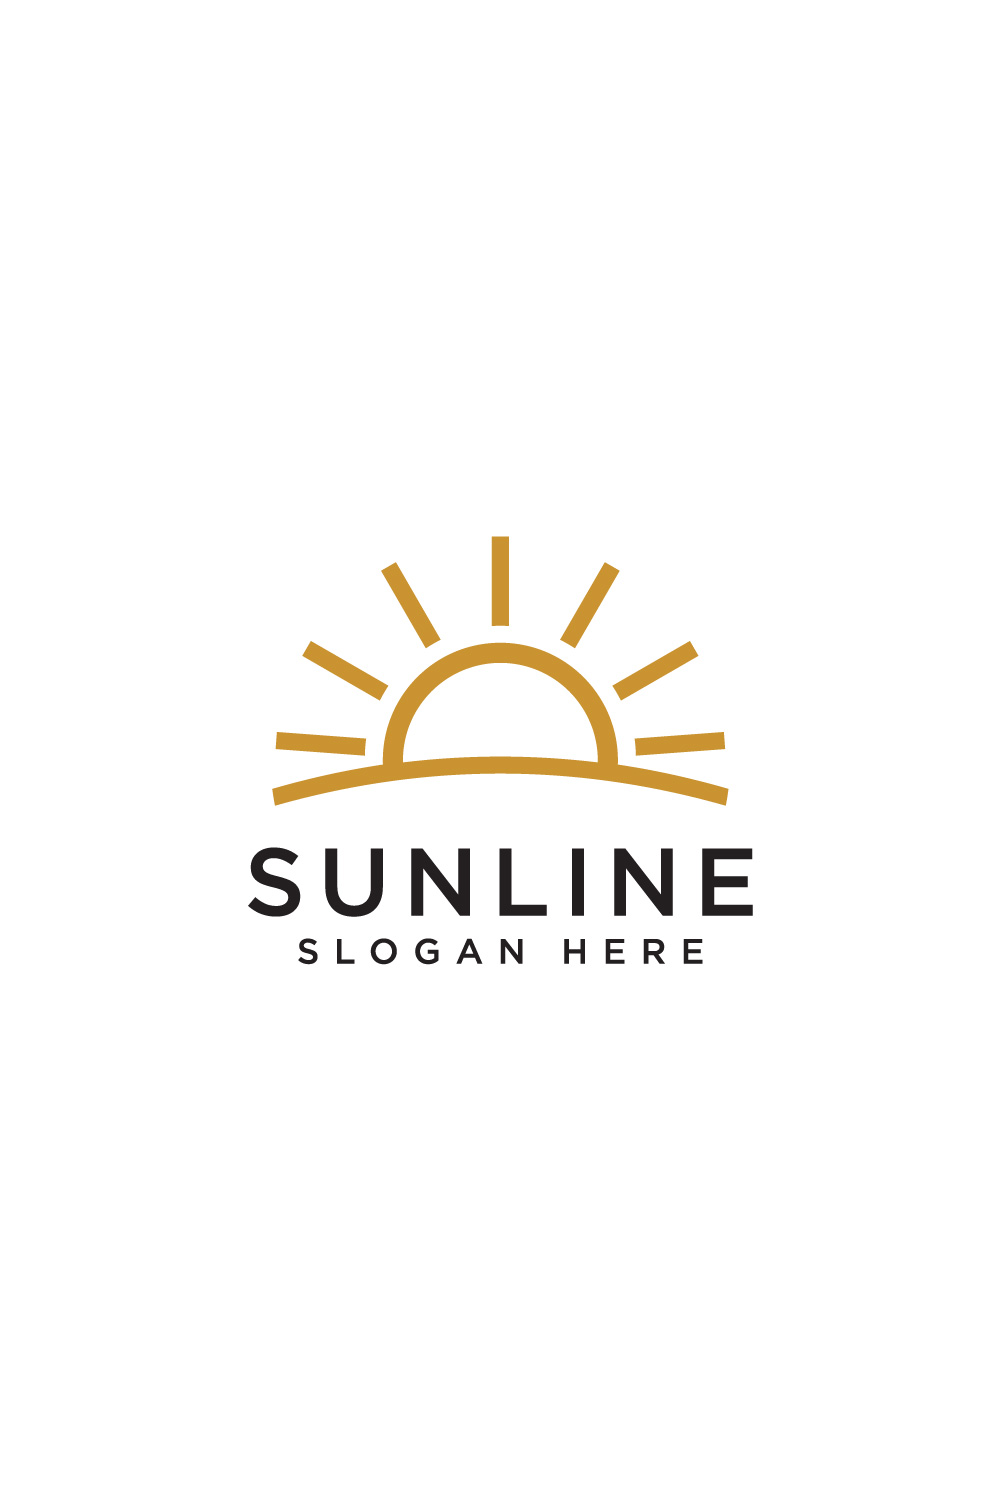 sun line art logo vector pinterest preview image.